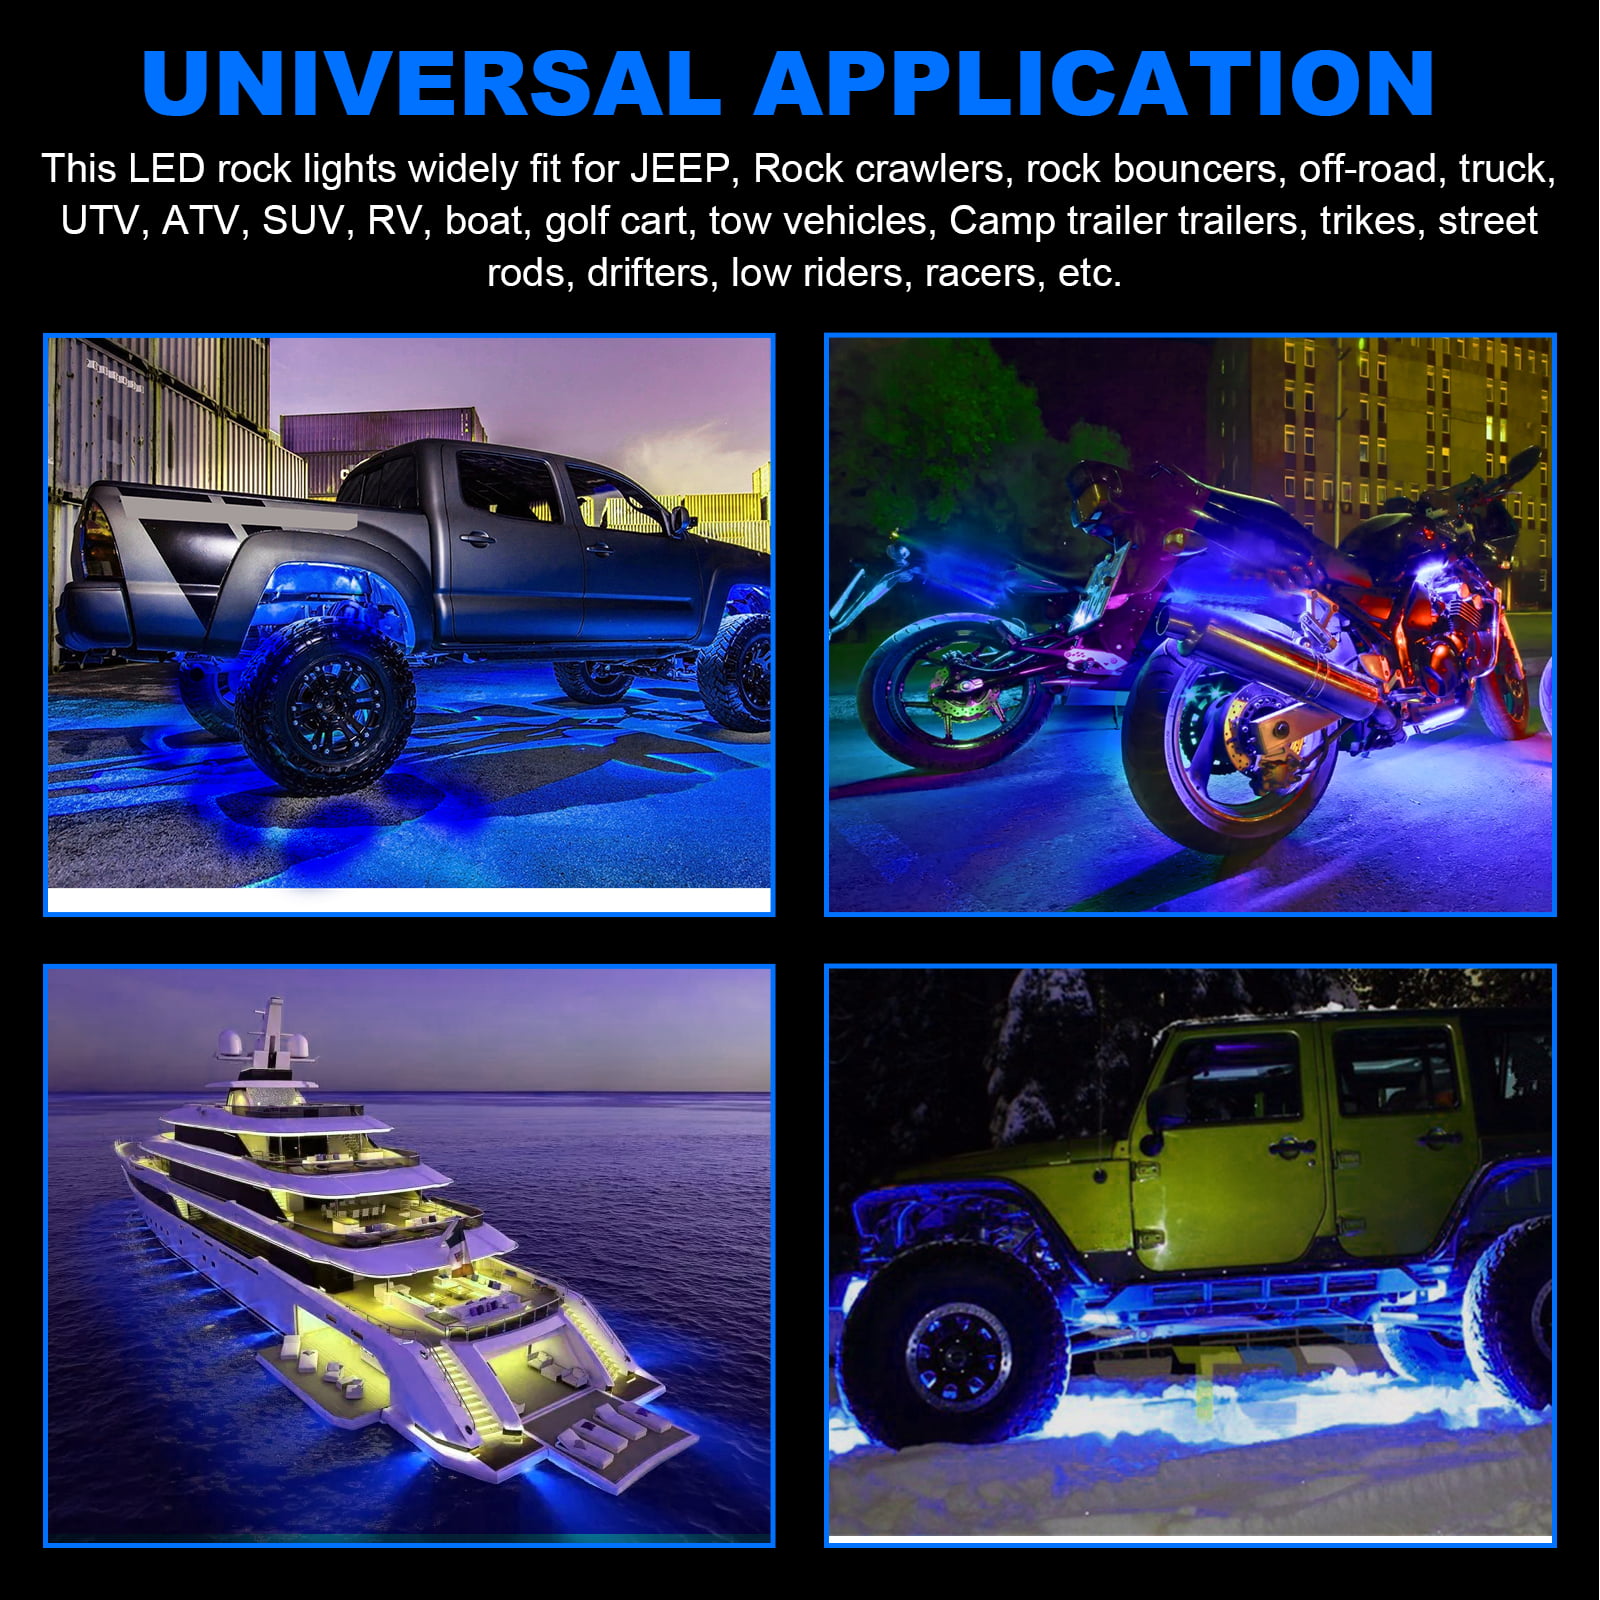 2PCS,Blue LEDUR LED Rock Light Kits JEEP ATV SUV Offroad Truck Boat Underbody Glow Trail Rig Lamp Waterproof 